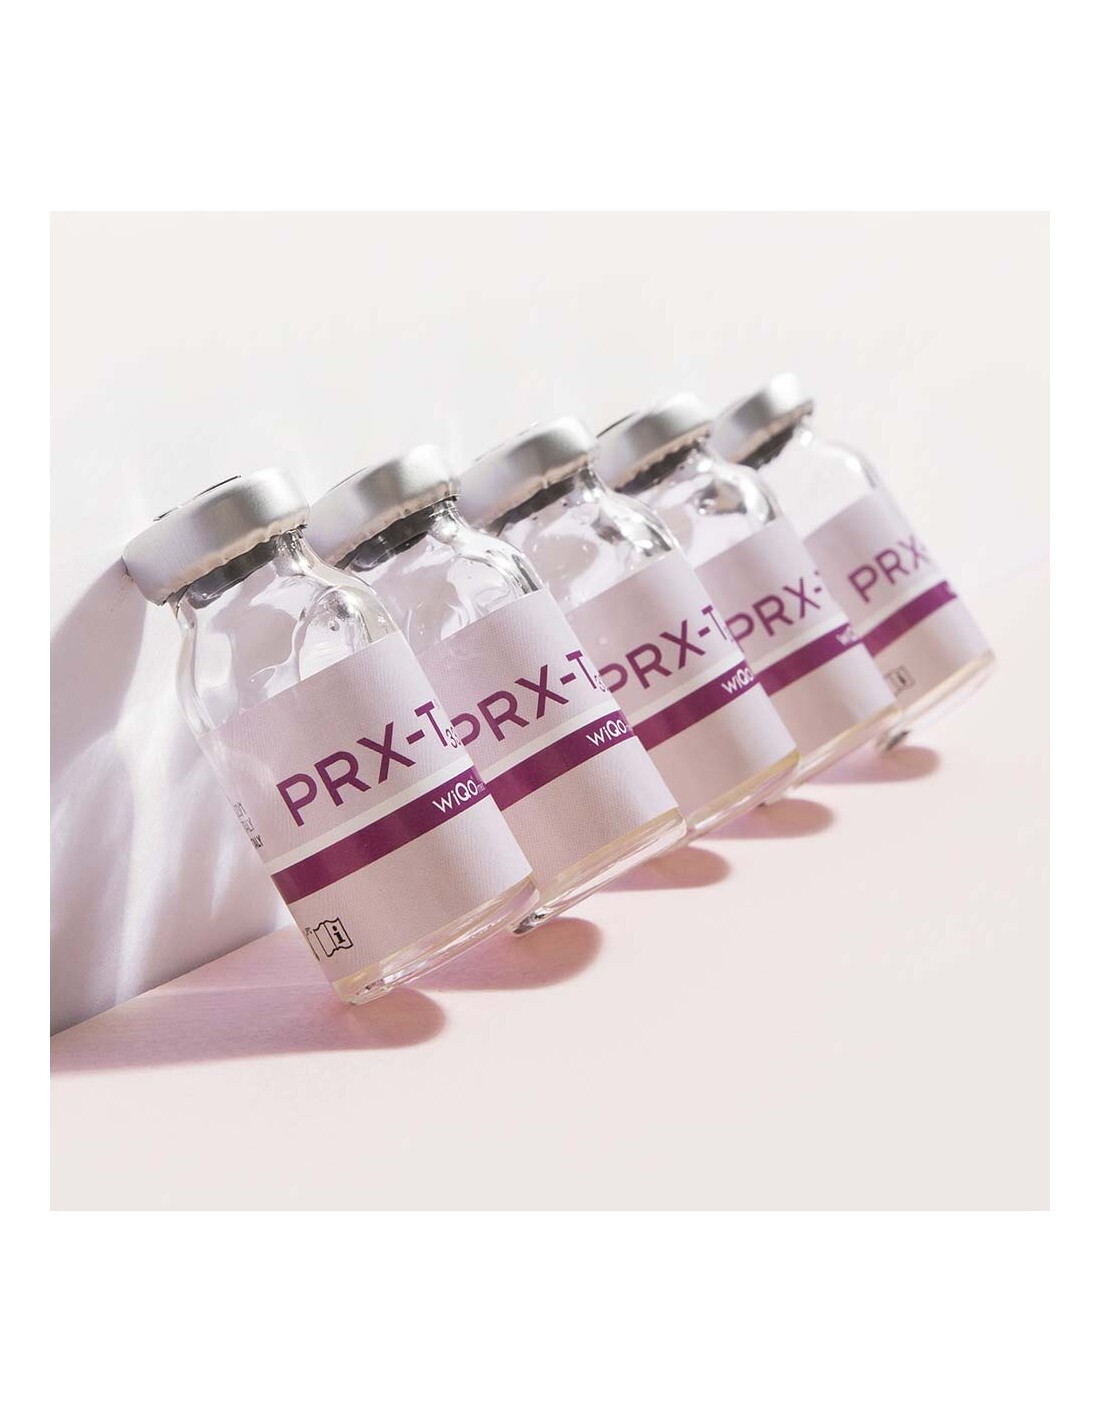 PRX-T33 behandling